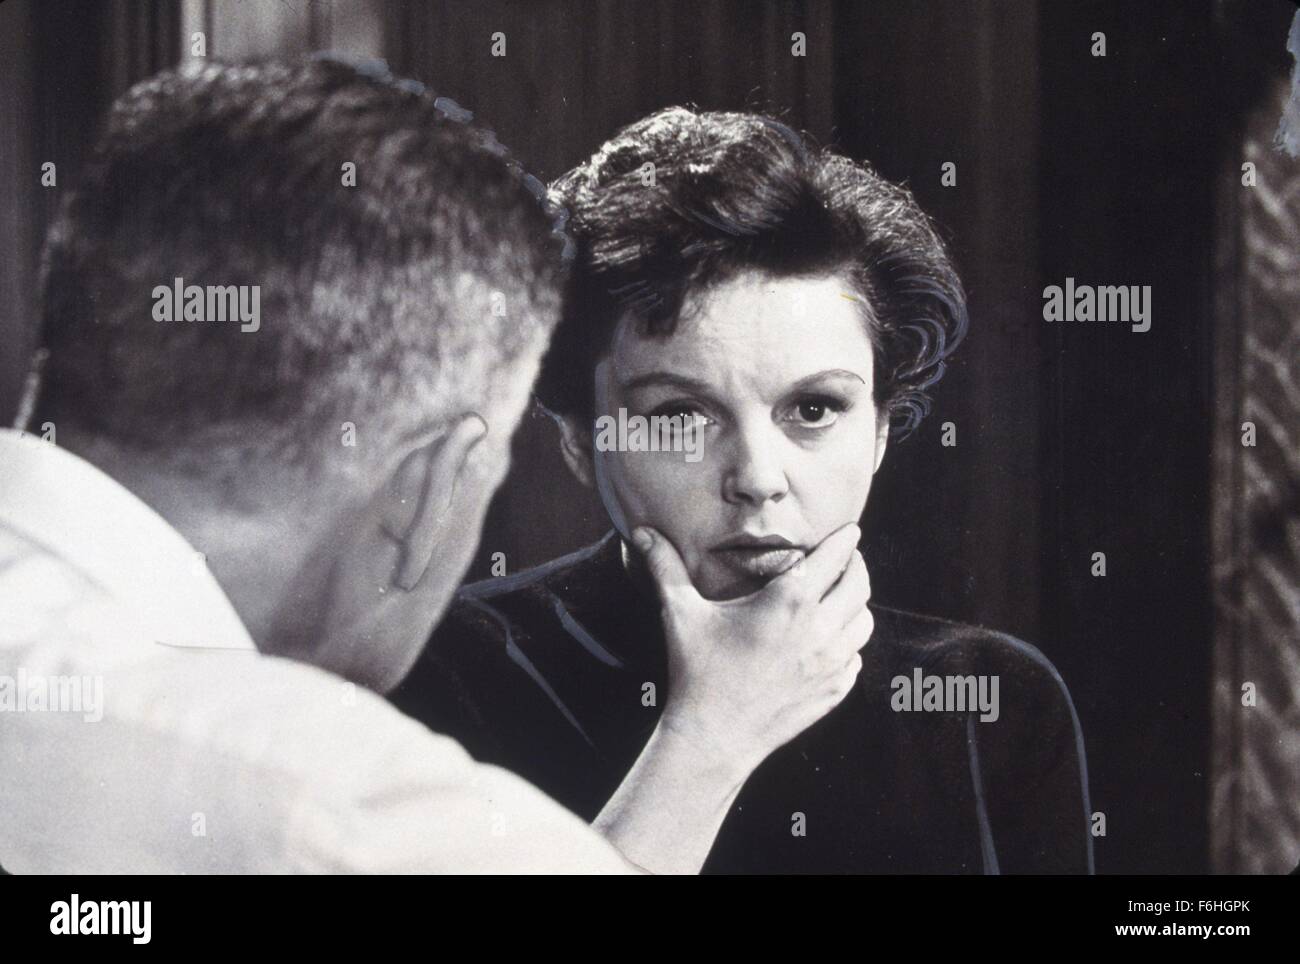 1961, Filmtitel: Urteil in Nürnberg, Regie: STANLEY KRAMER, Studio: UA, im Bild: JUDY GARLAND. (Bild Kredit: SNAP) Stockfoto